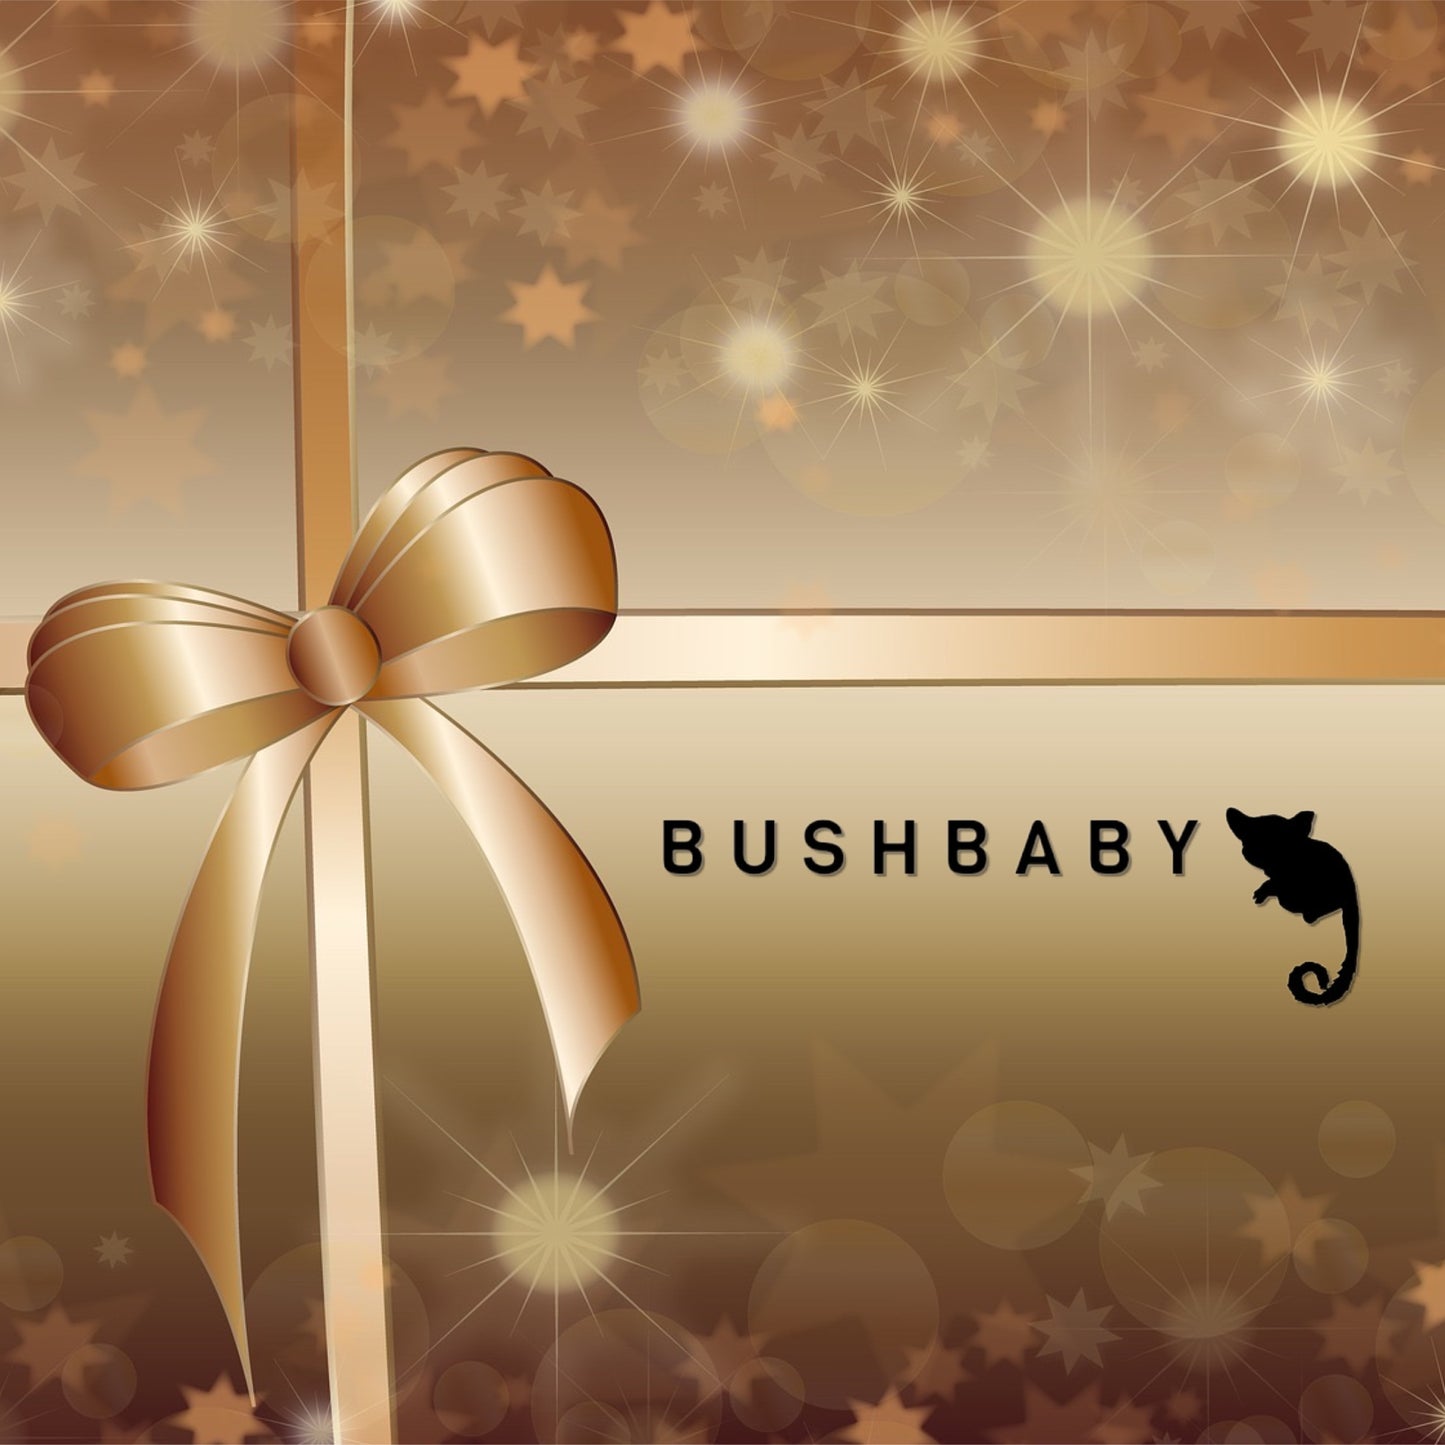 BUSHBABY gift card